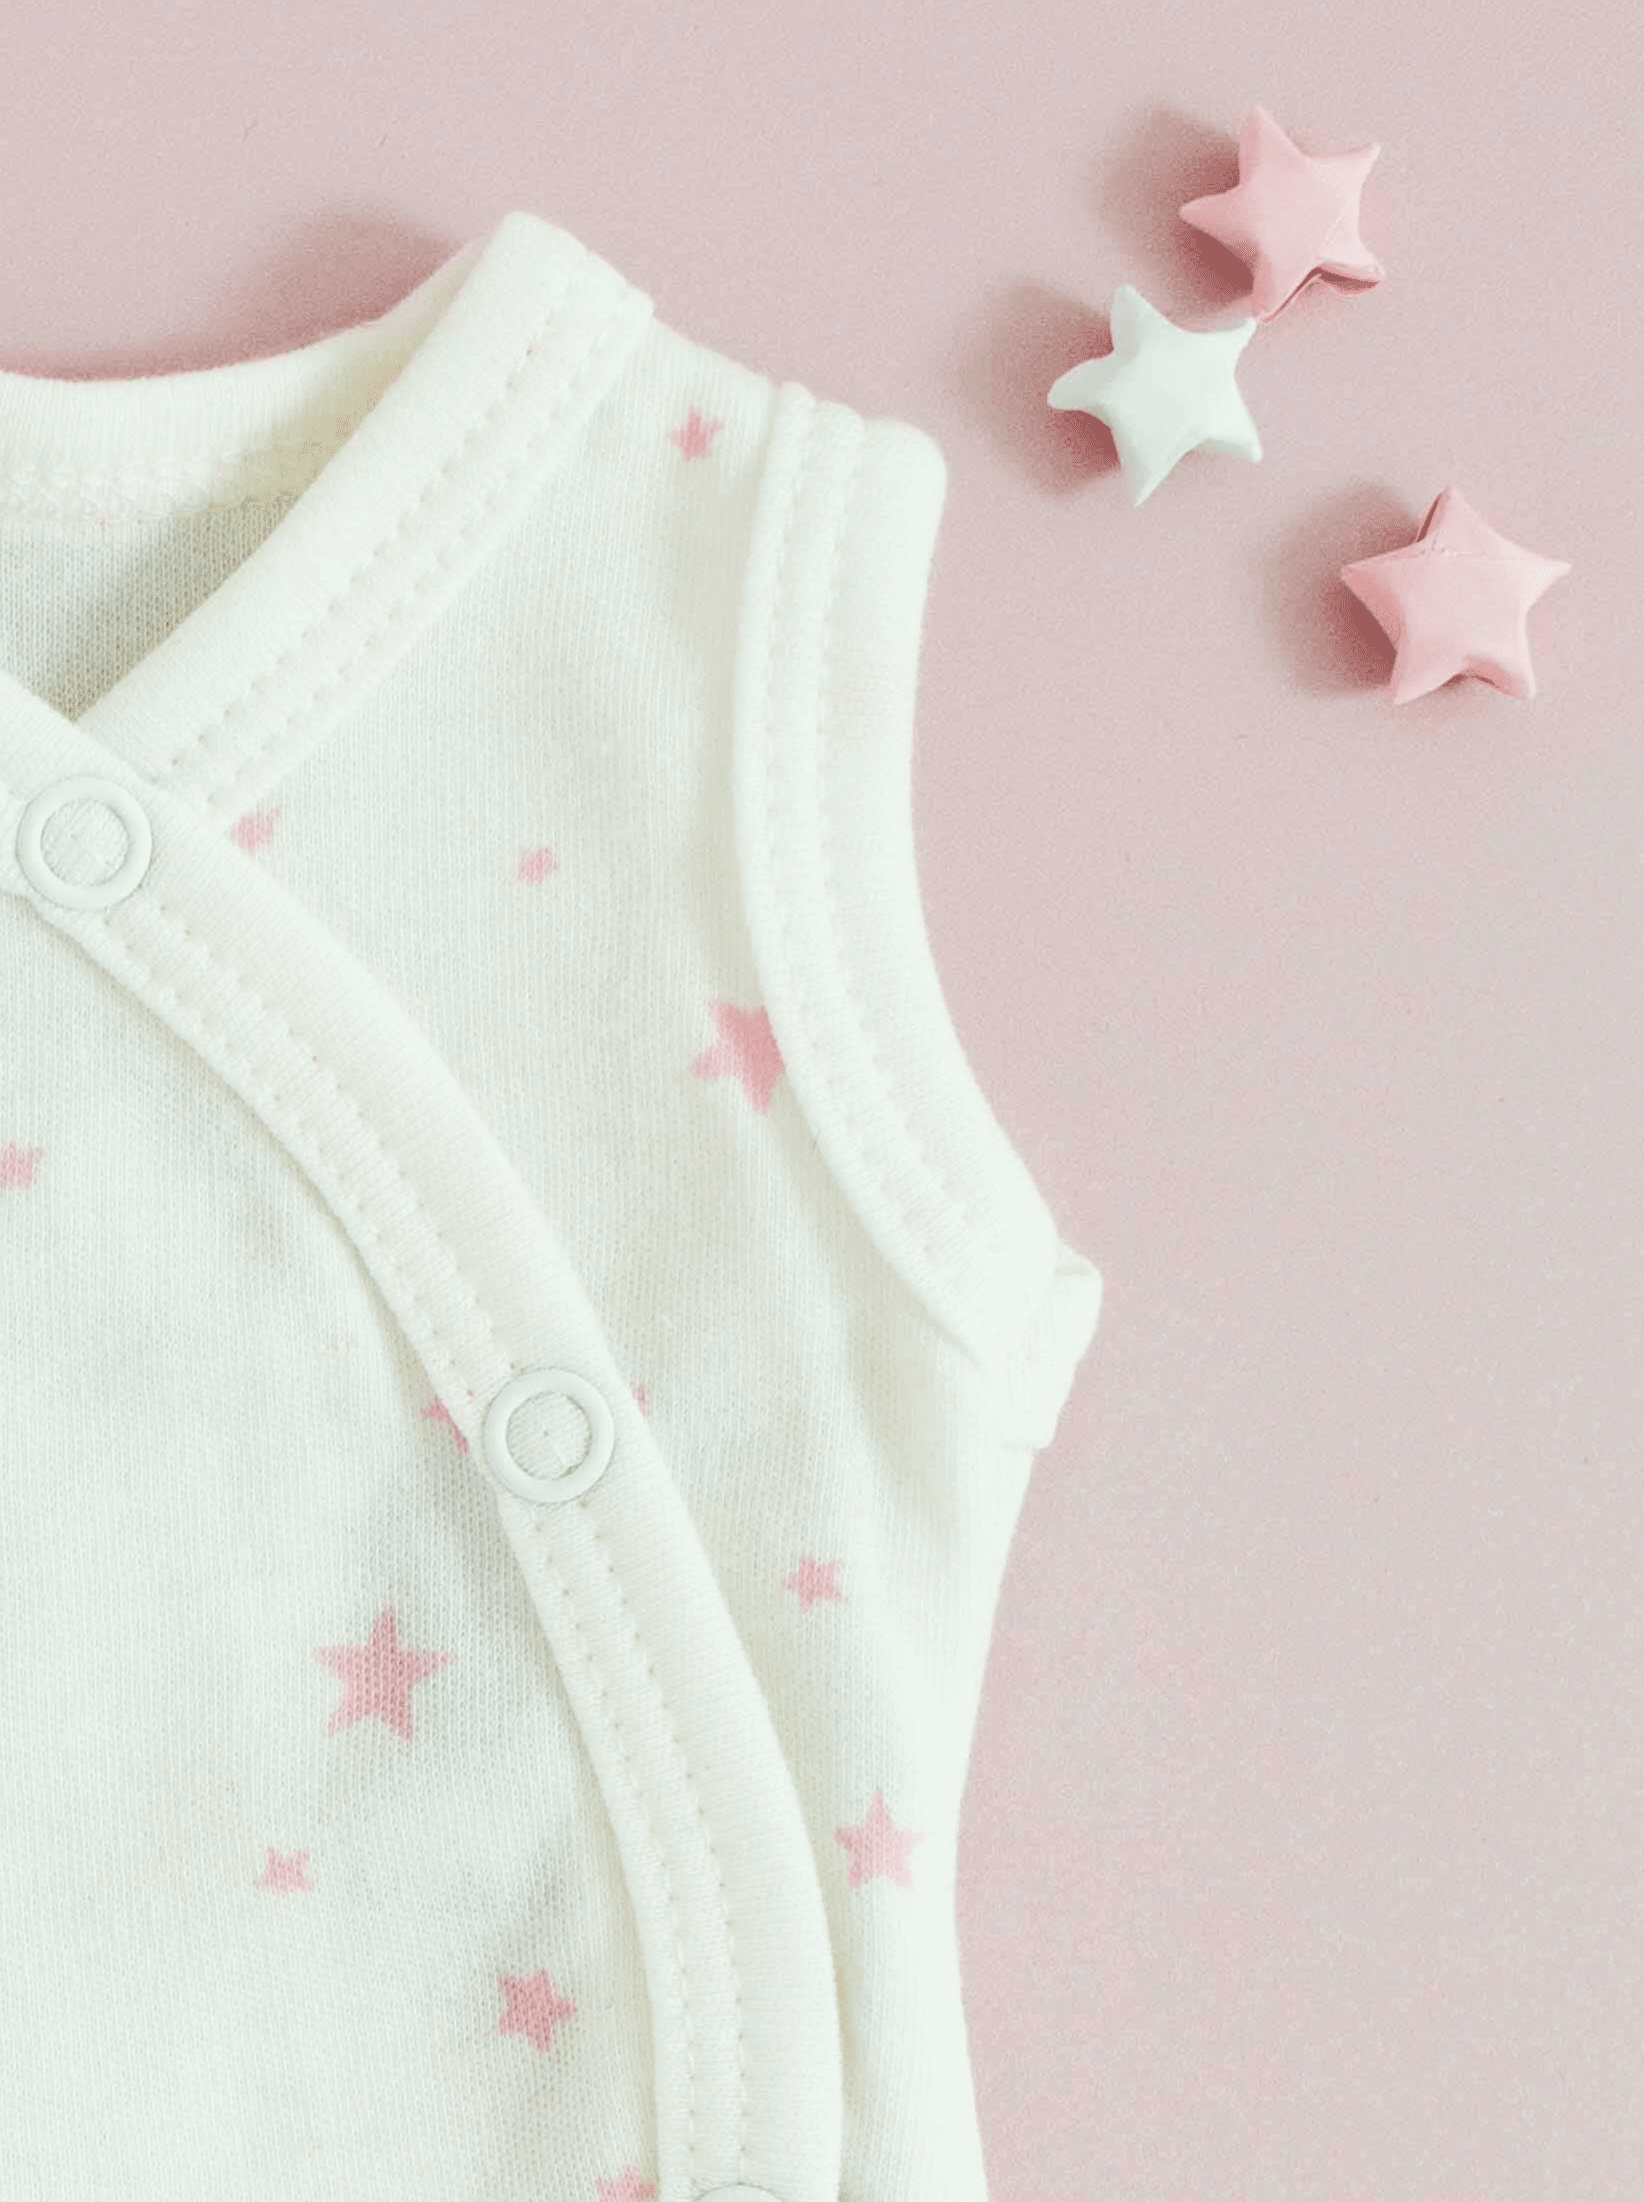 Incubator Vest, Pink Stars, Premium 100% Organic Cotton Bodysuit / Vest Tiny & Small 